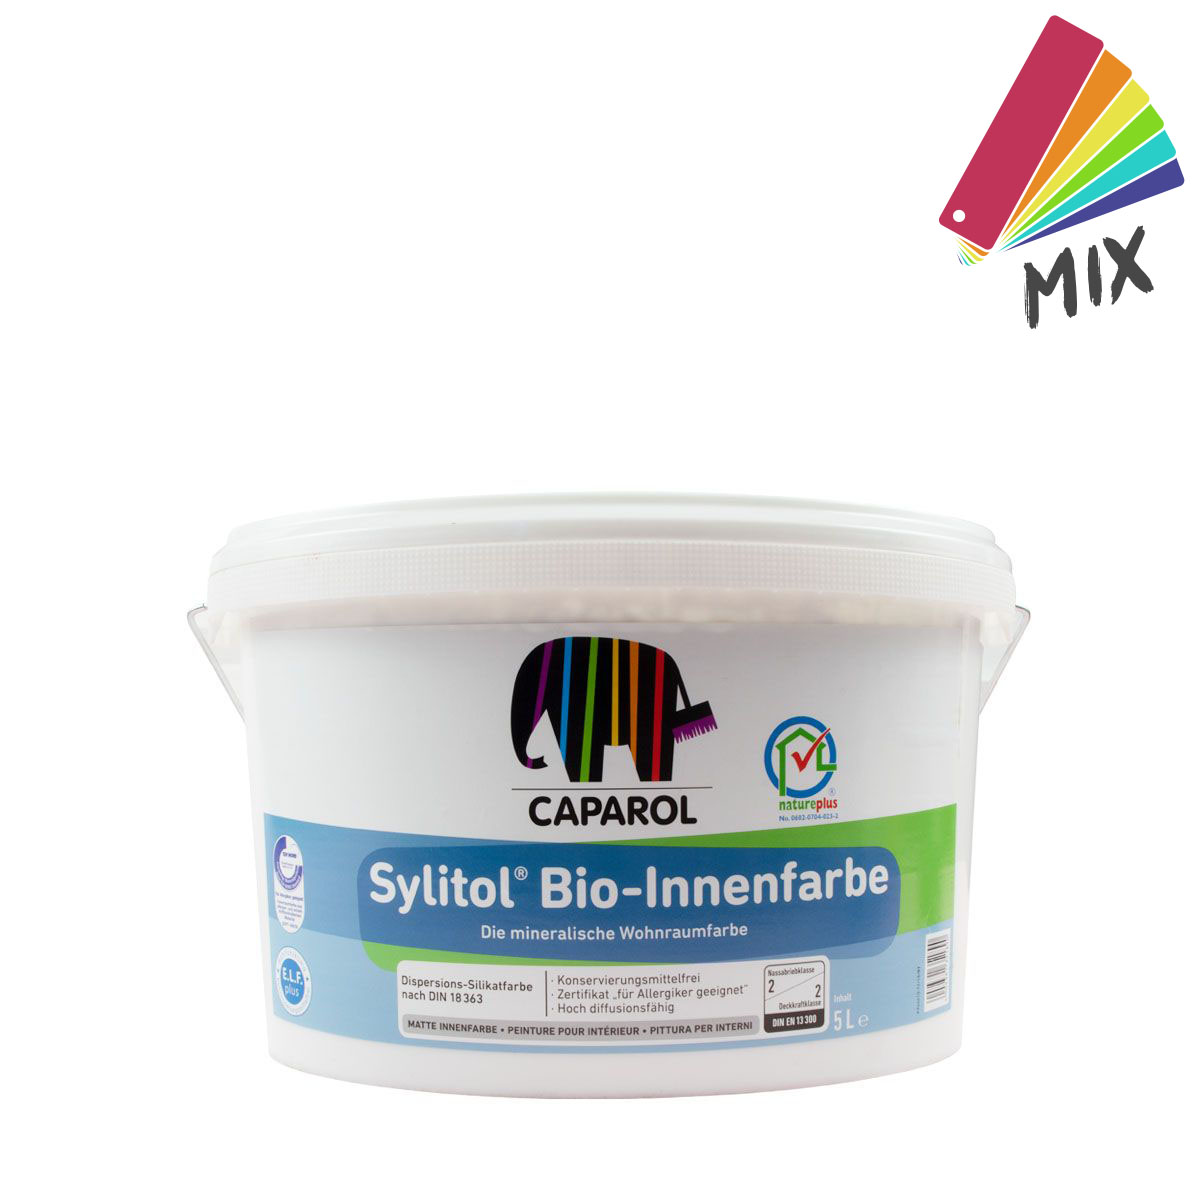 Caparol Sylitol Bio-Innenfarbe 5L MIX PG B, Allergiker geeignet